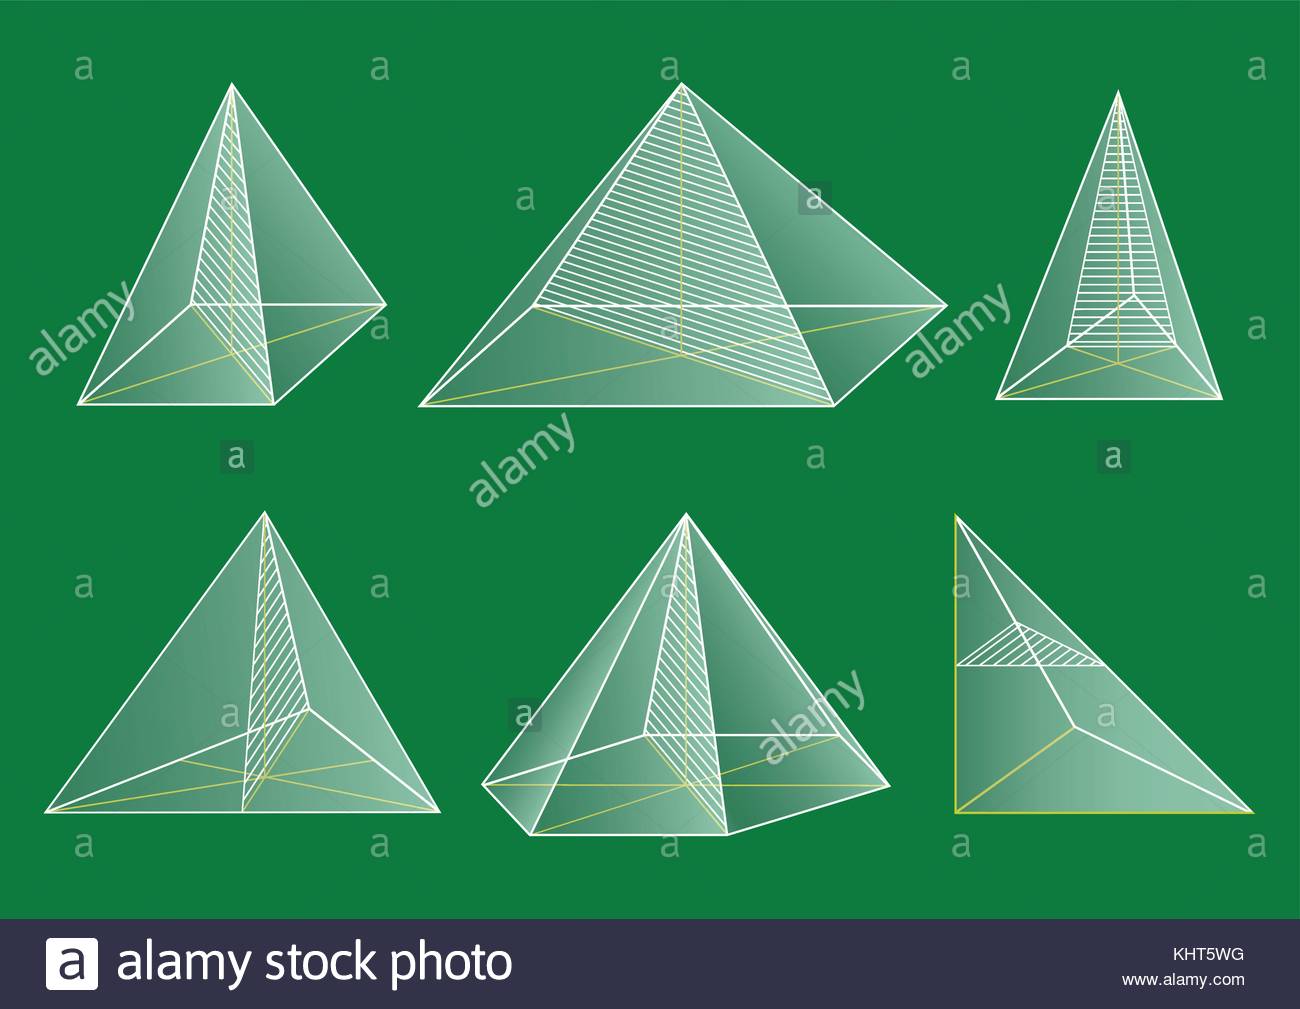 Shape Pyramids Tetrahedron Pyramid Stock Photos & Shape Pyramids ...